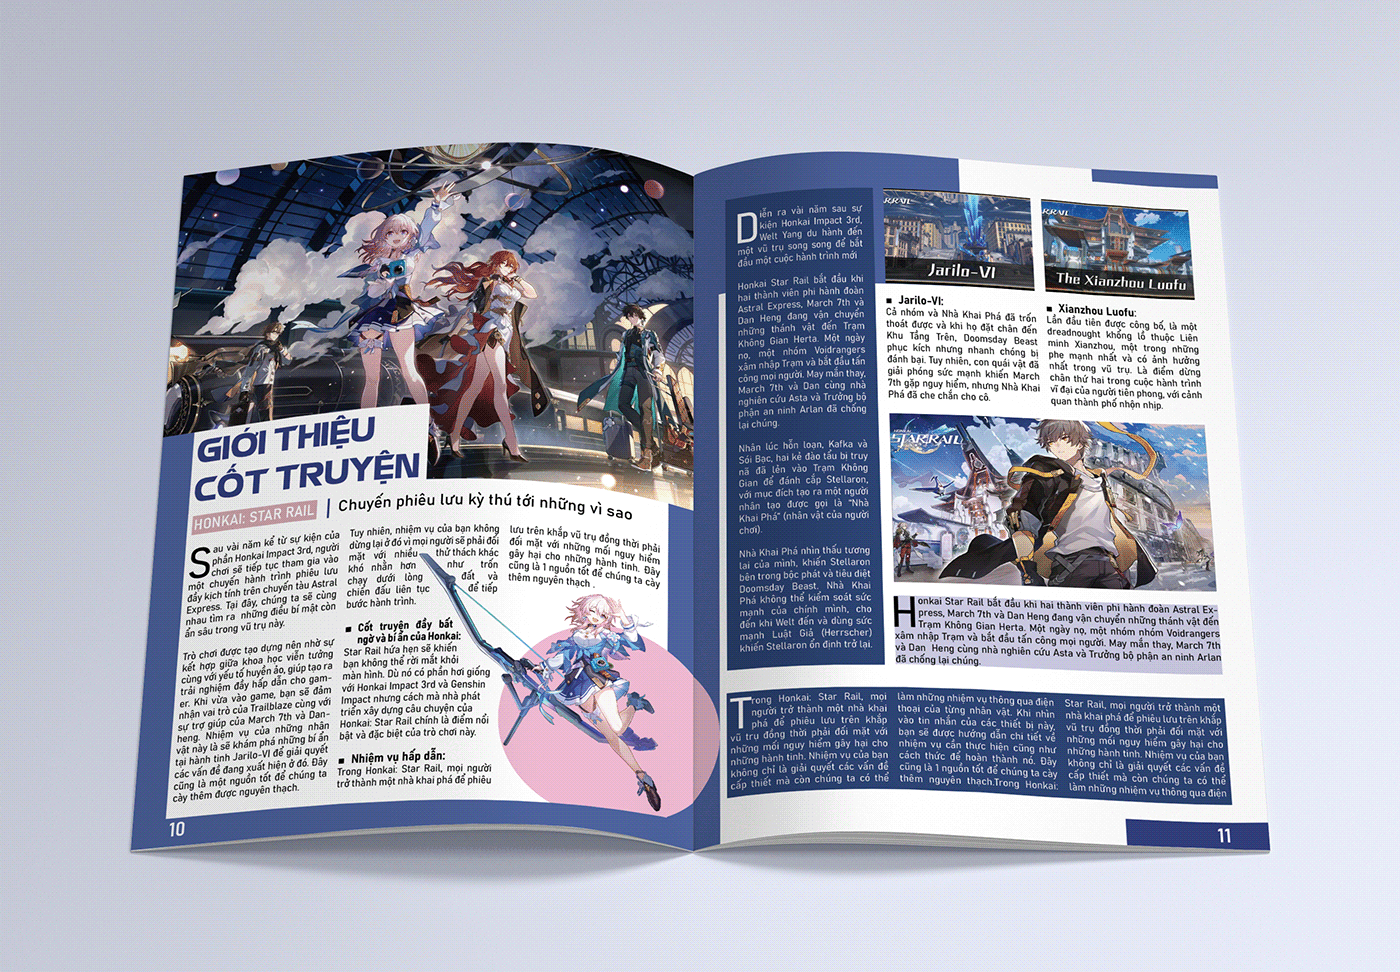 honkai star rail Genshin impact hoyoverse magazine InDesign Layout gamemagazine hoyoversegame